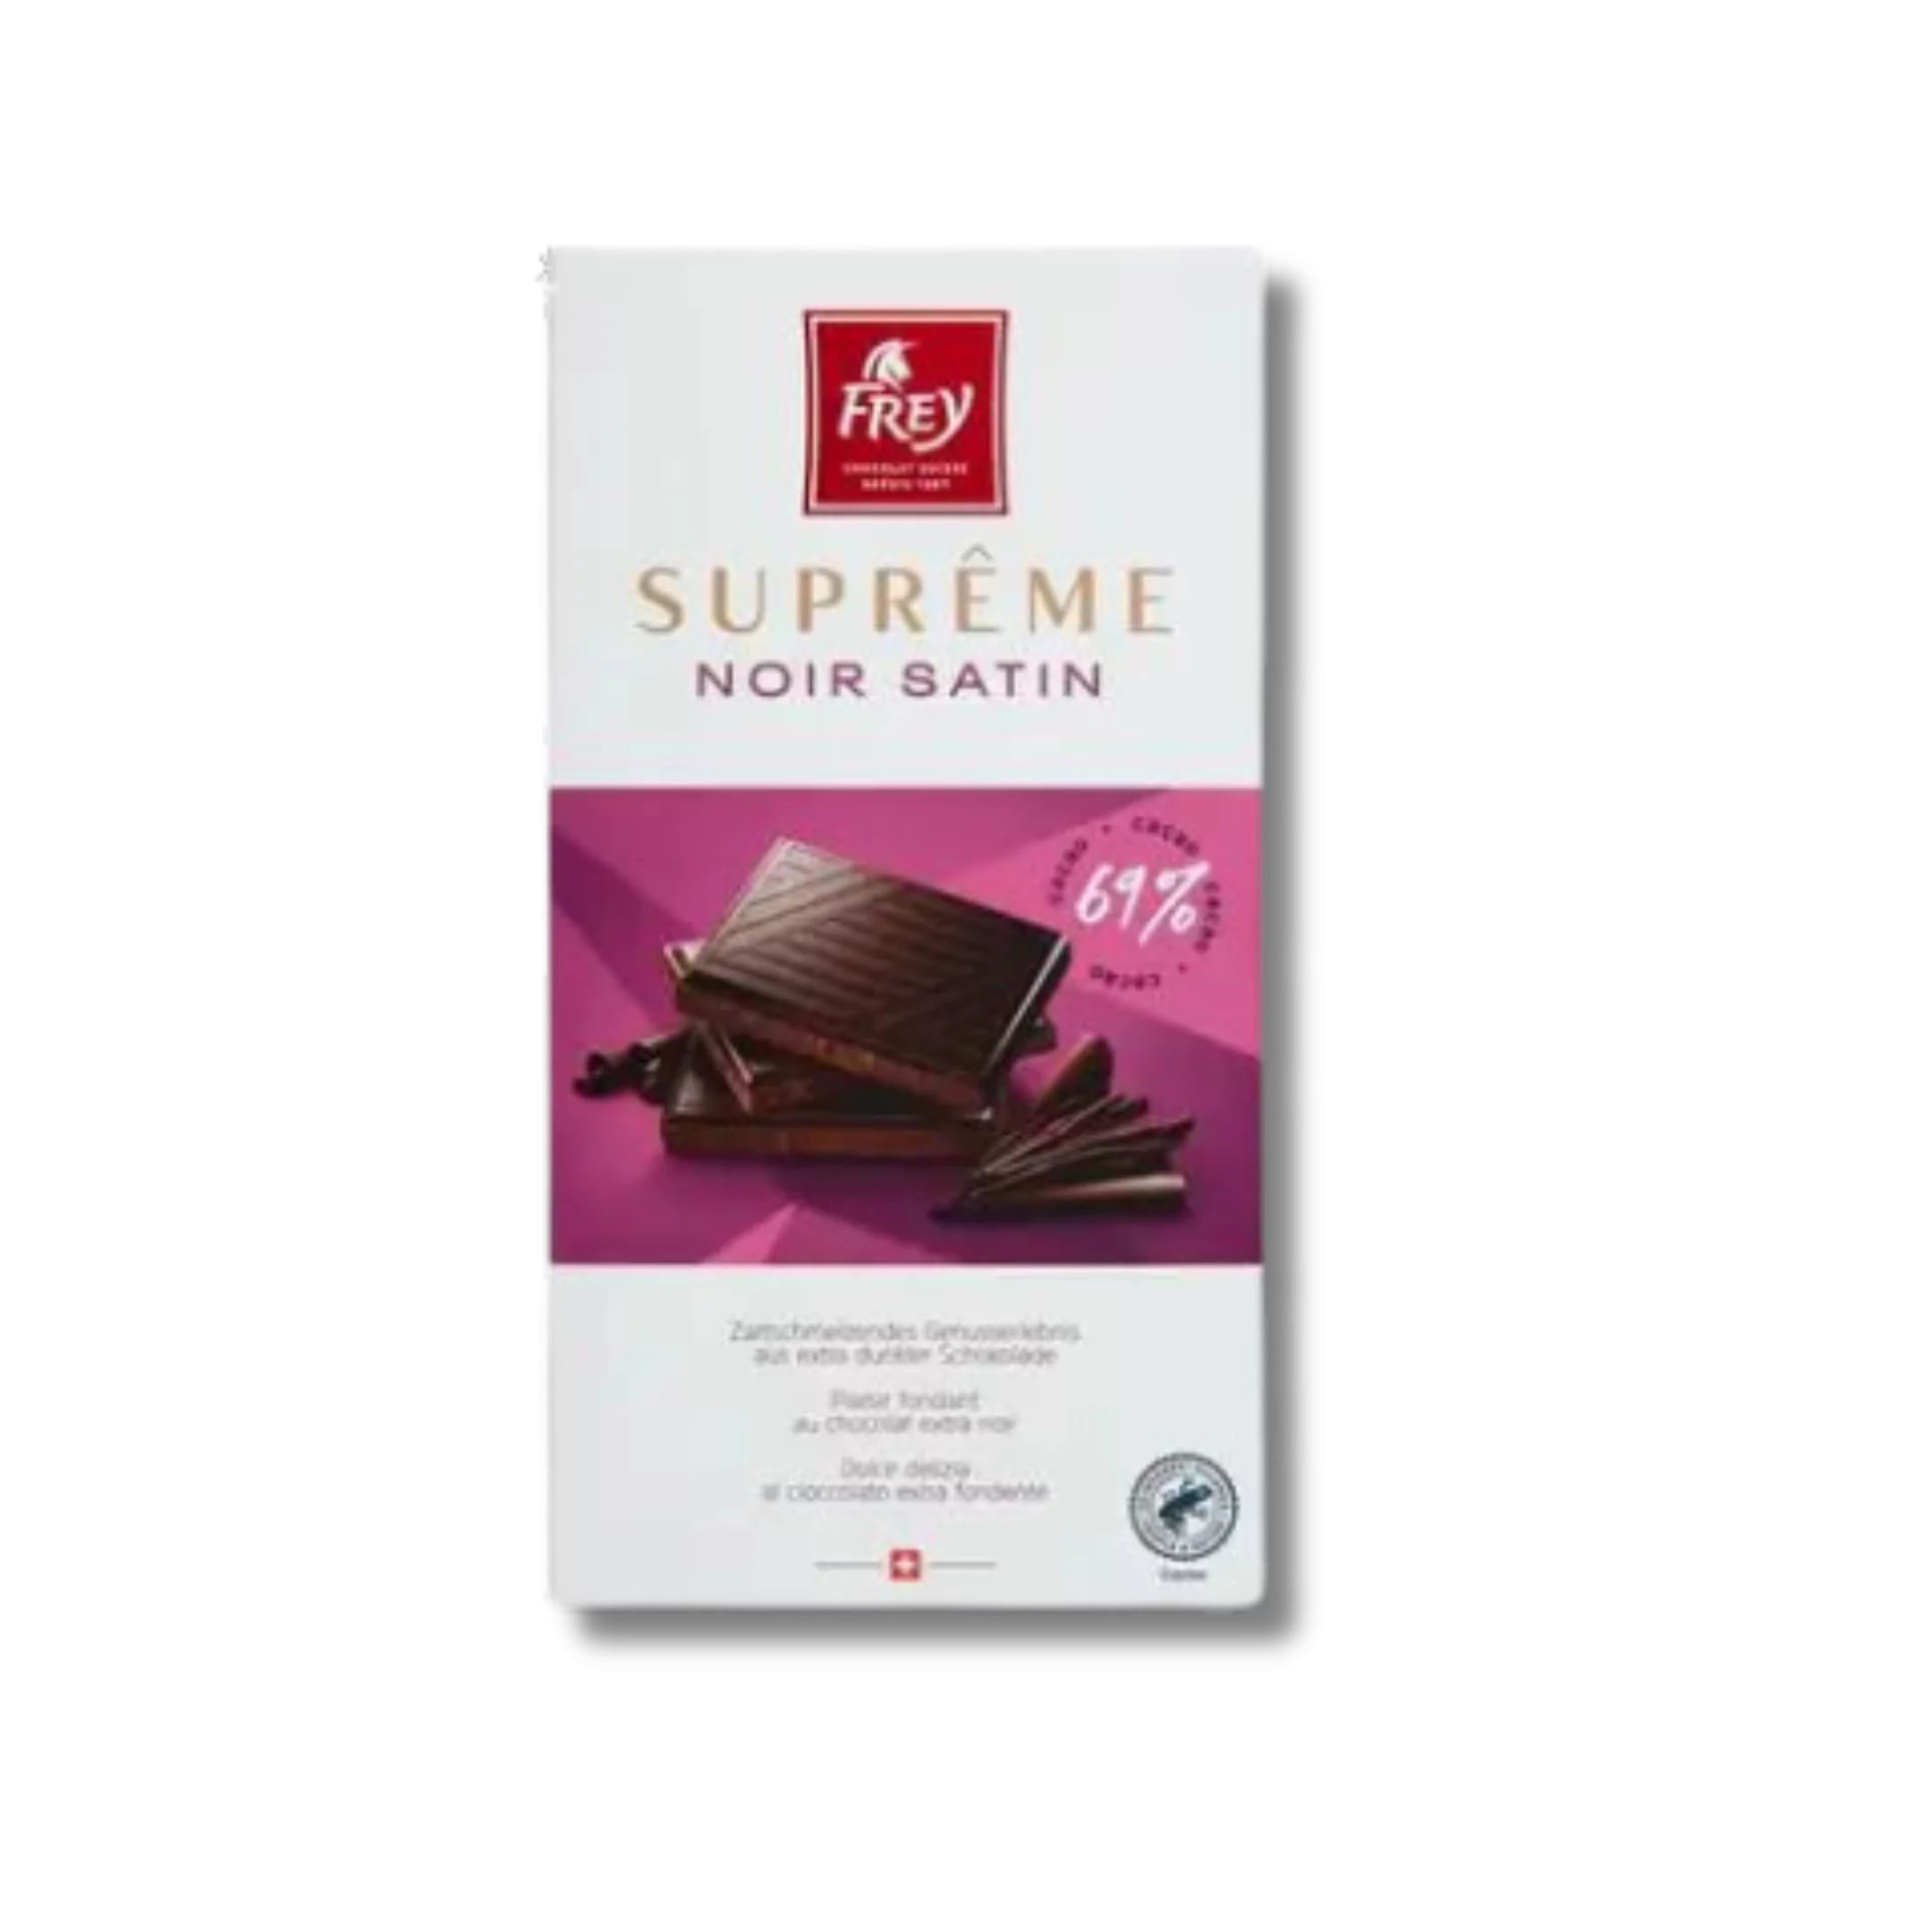 supreme-dark-69%-satin-chocolate-100g-frey